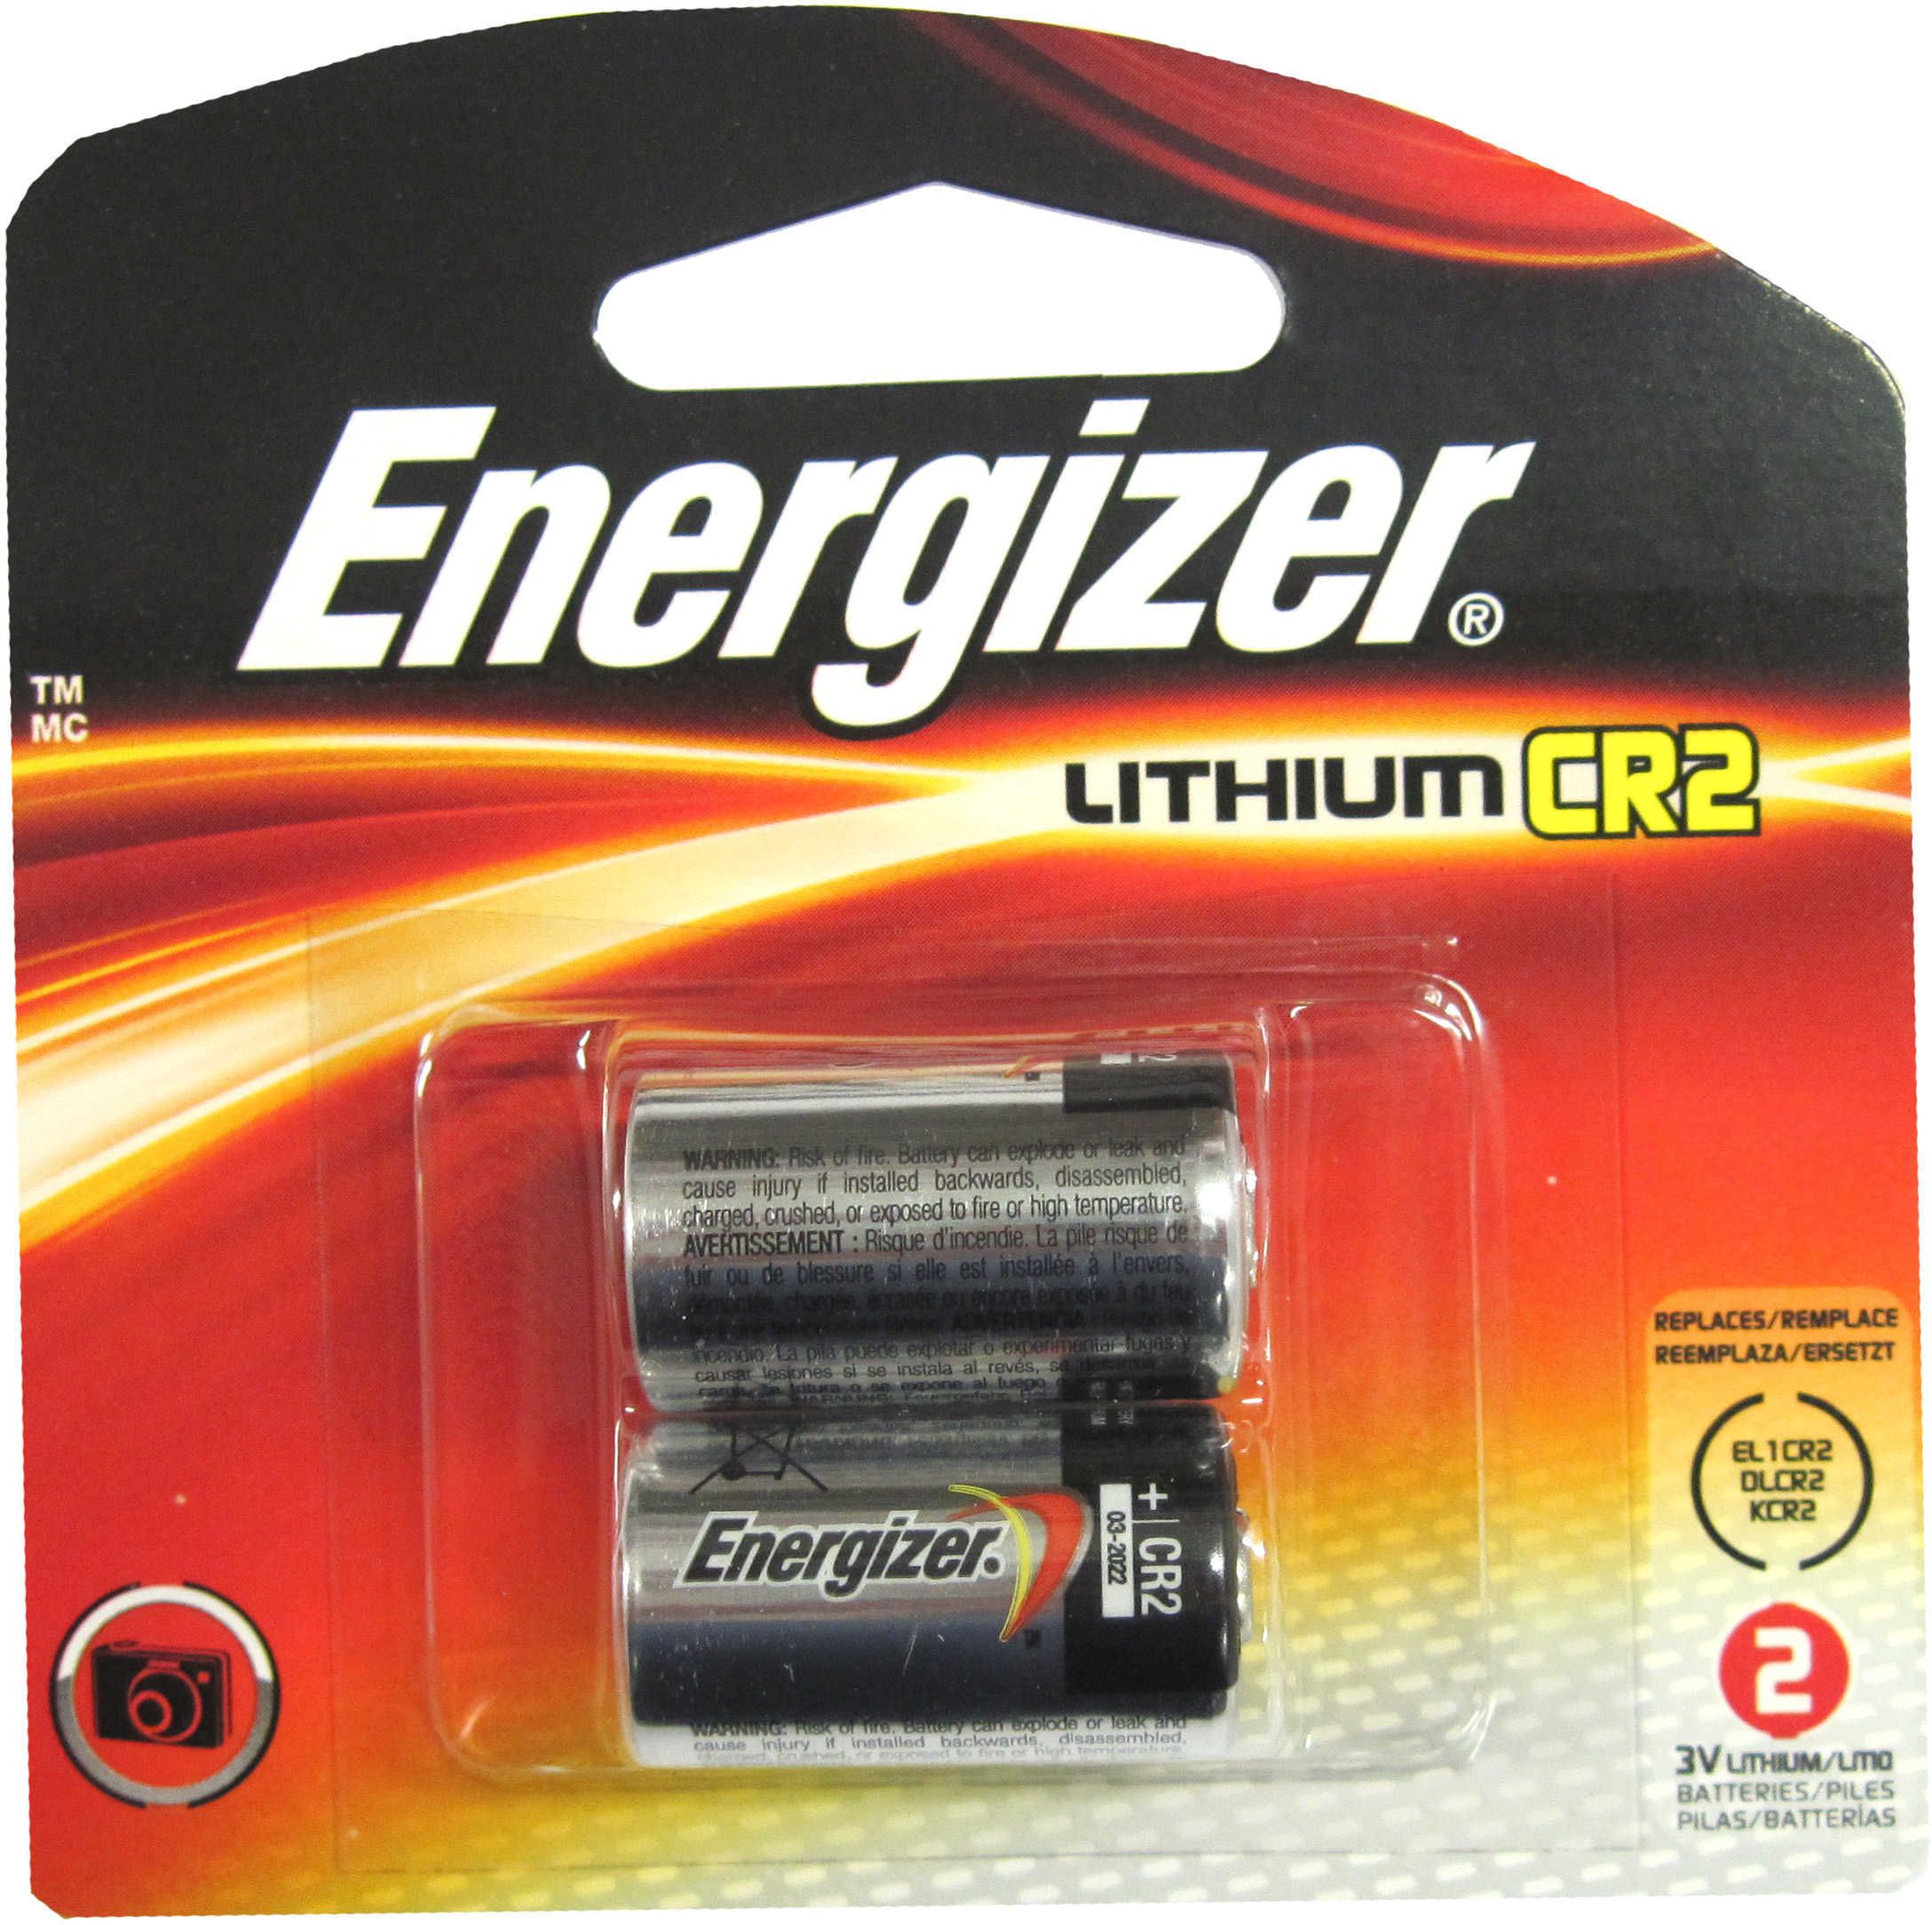 Energizer CR2 Lithium (Per 2) EL1CR2BP2